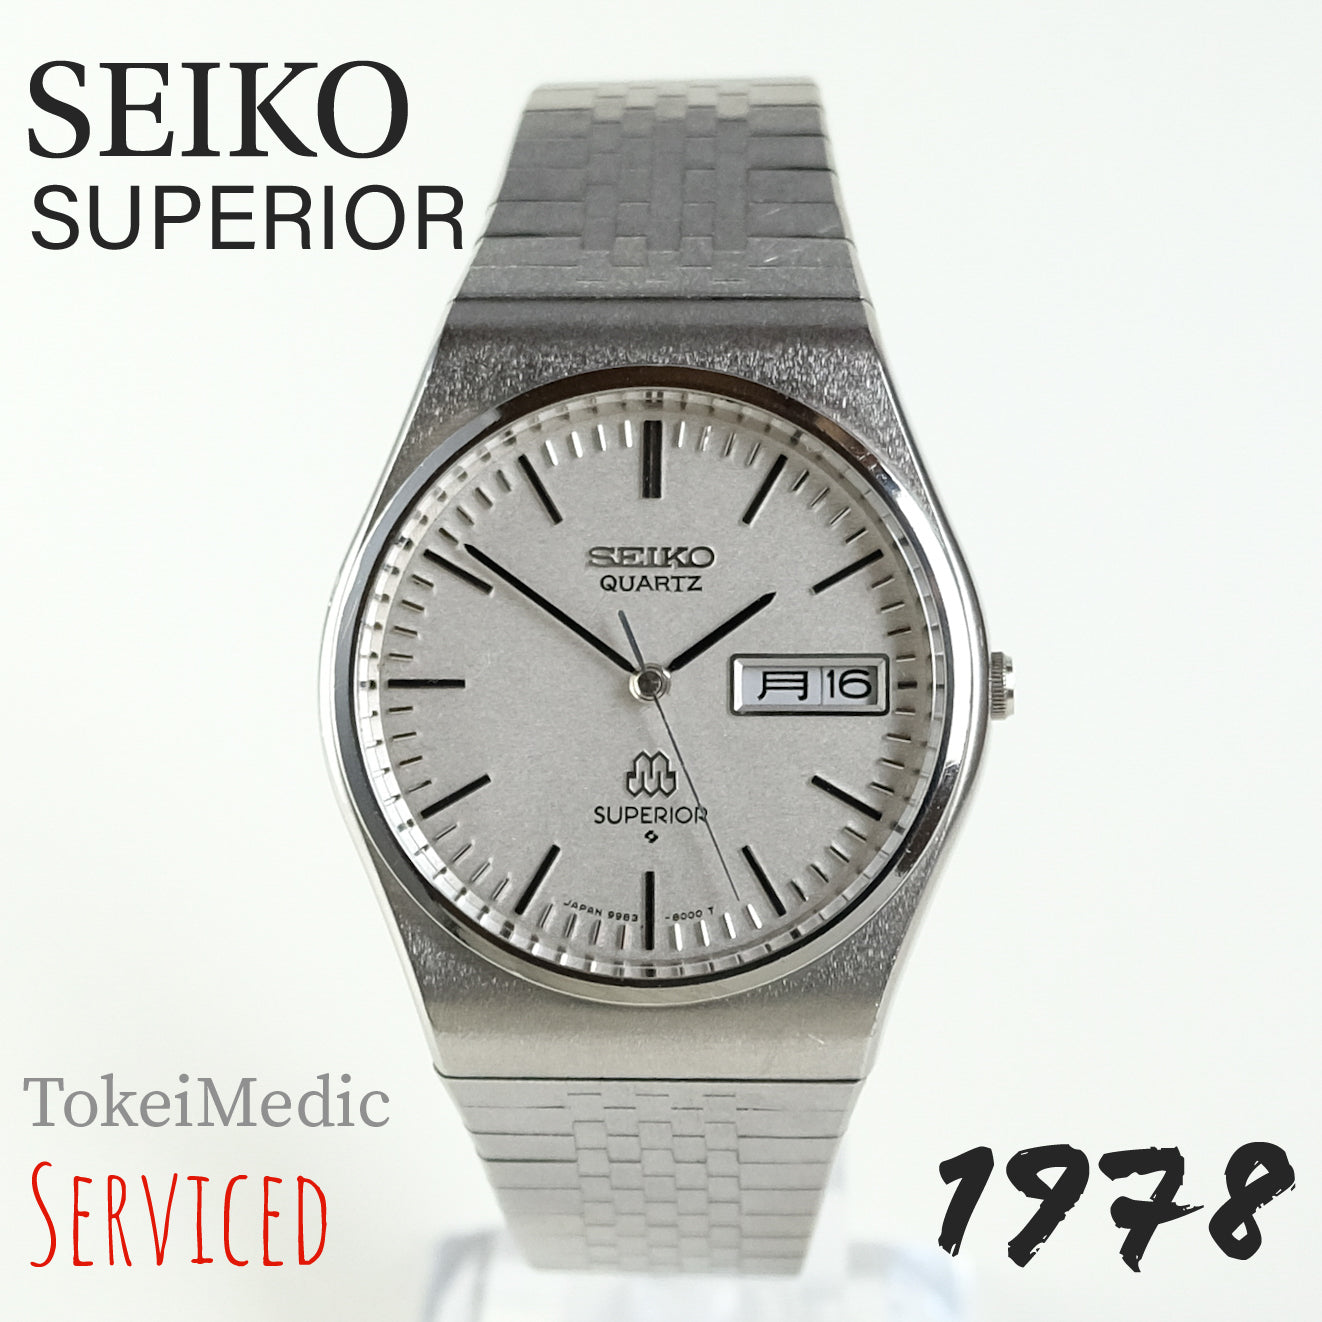 1978 Seiko Quartz Superior 9983-8000